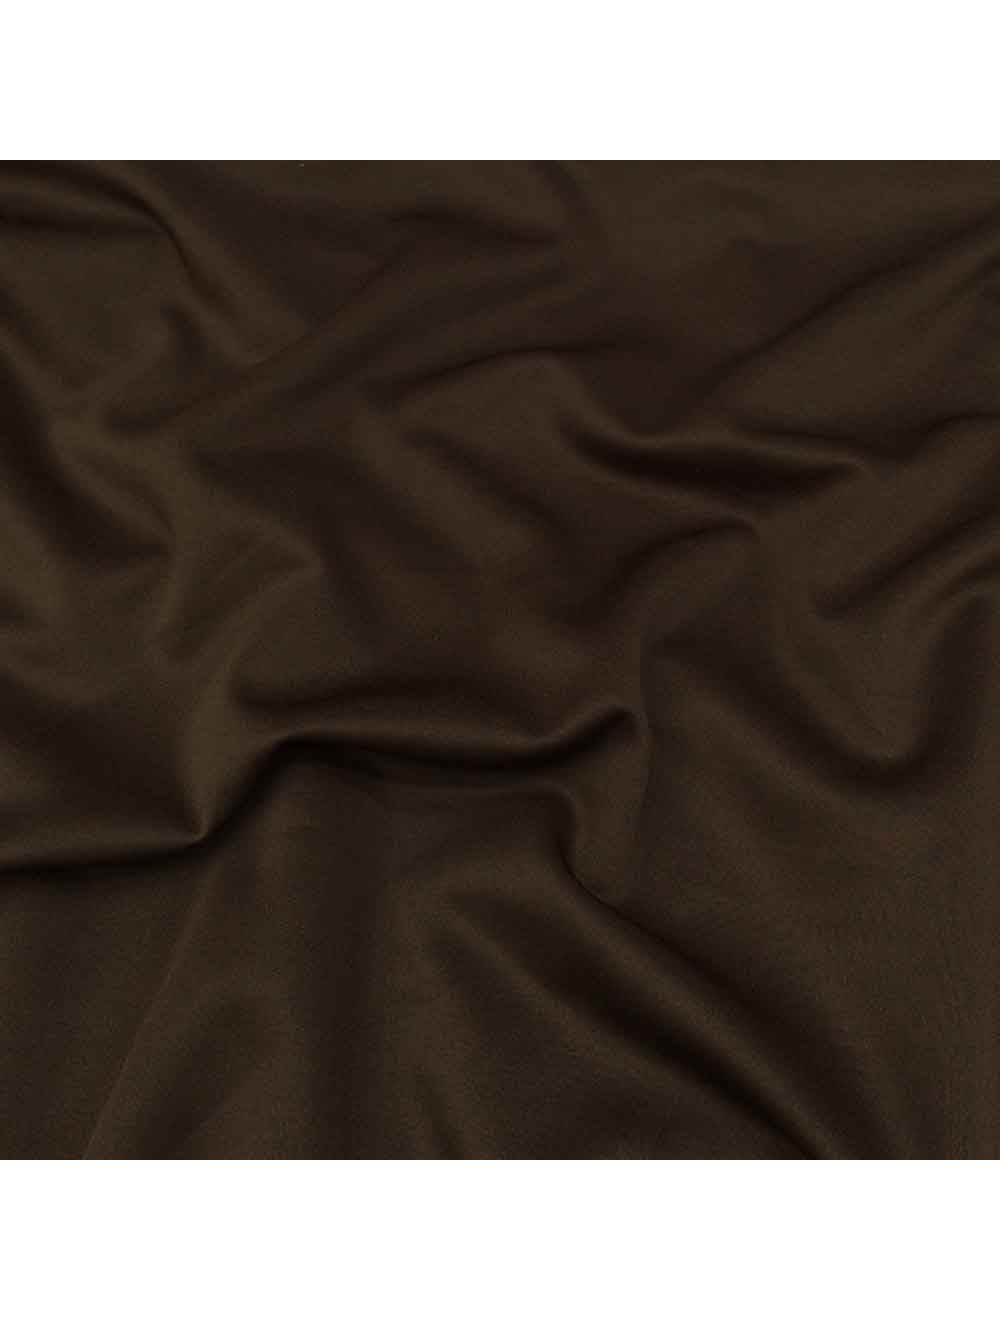 Black 60 Inches Stretch Scuba Neoprene Knit Fabric